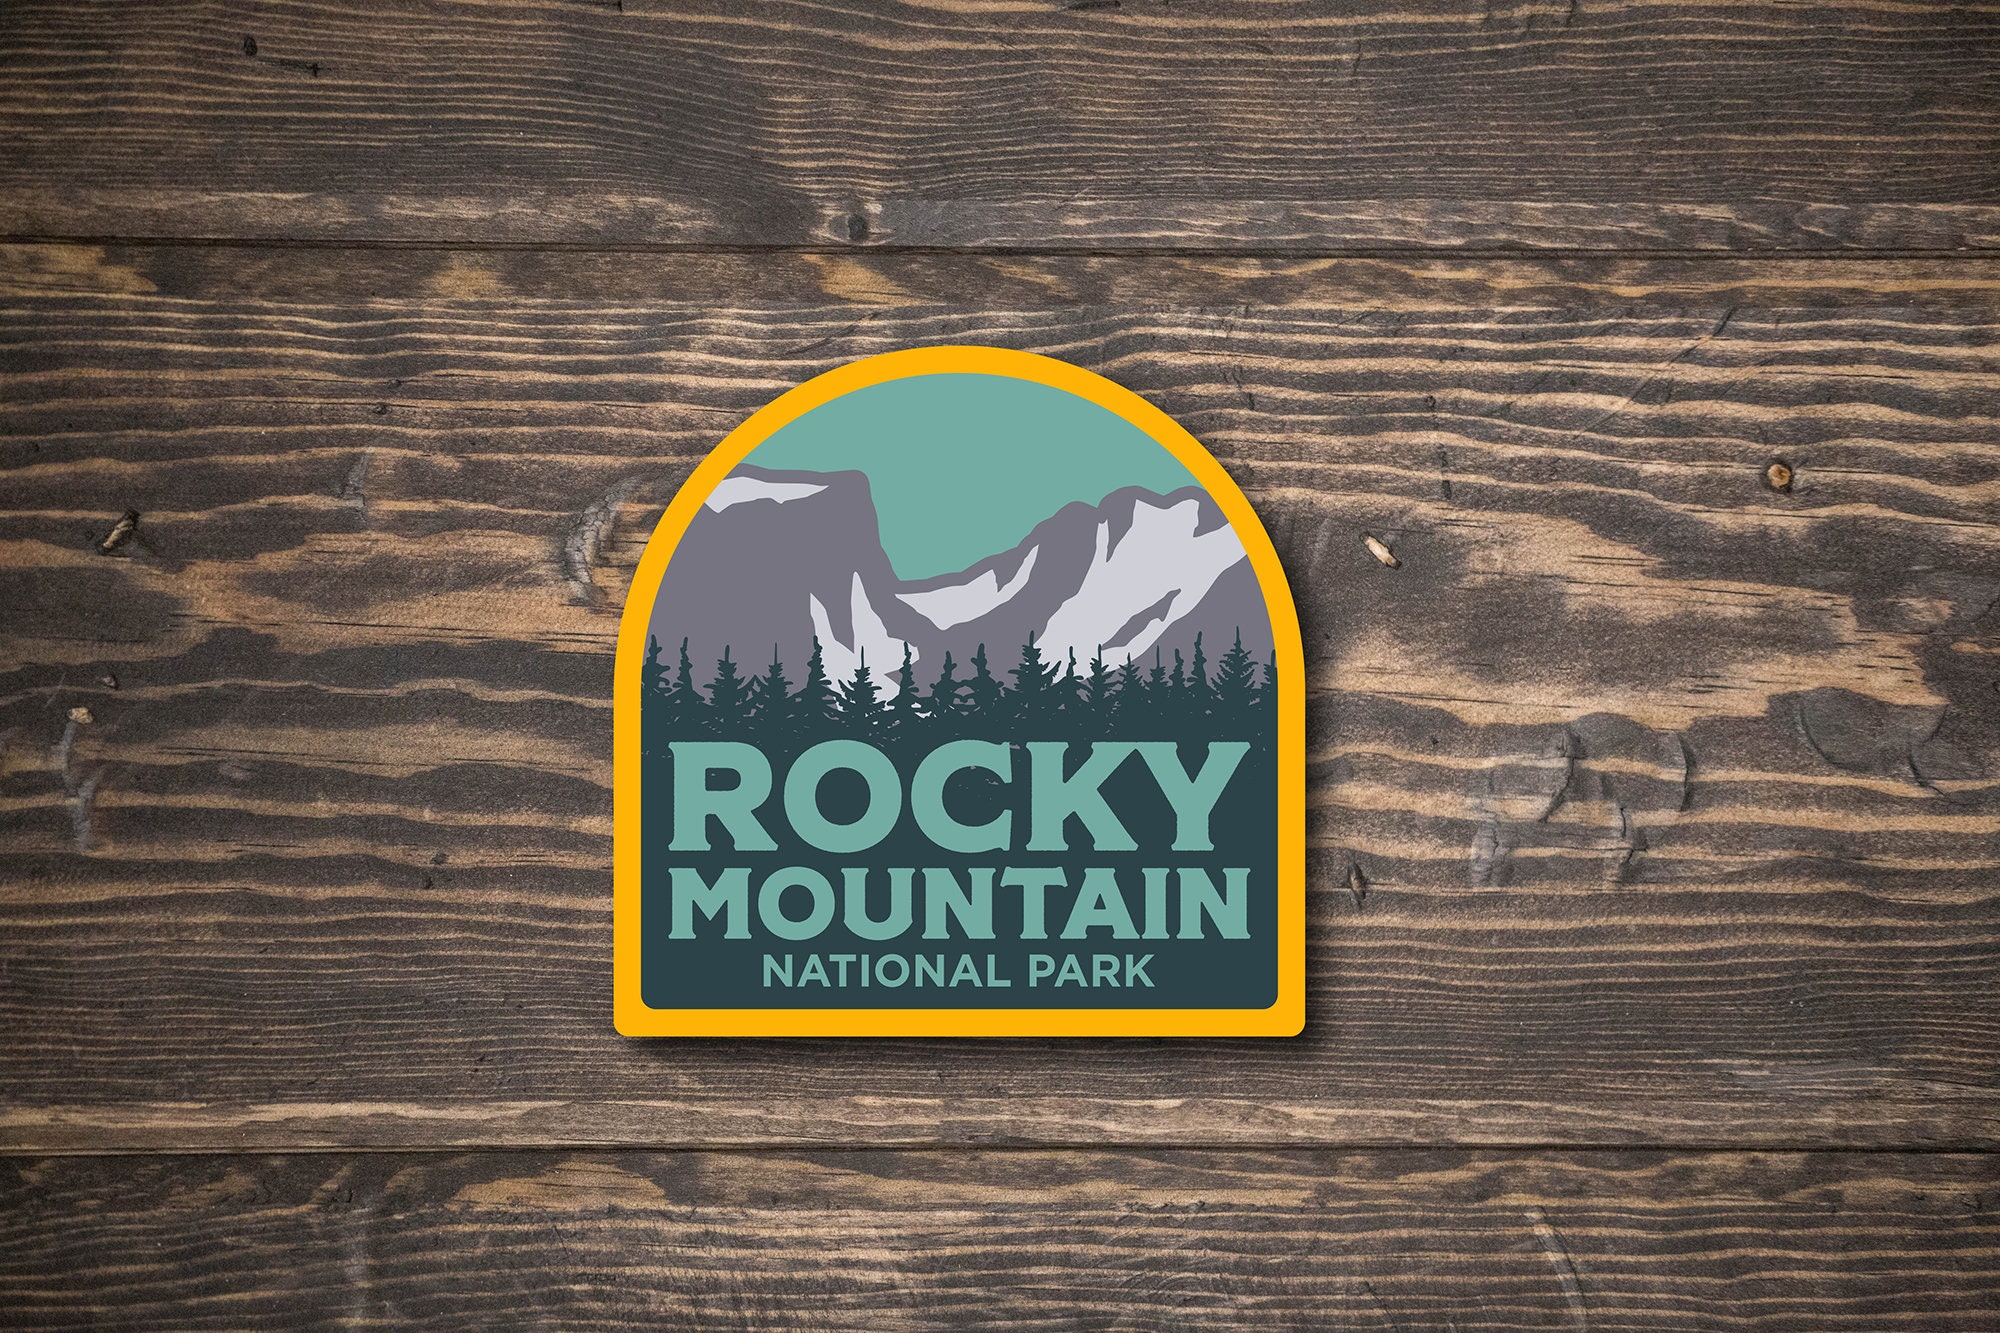 T-Shirt – RMNP Dome Stripe - Rocky Mountain Conservancy